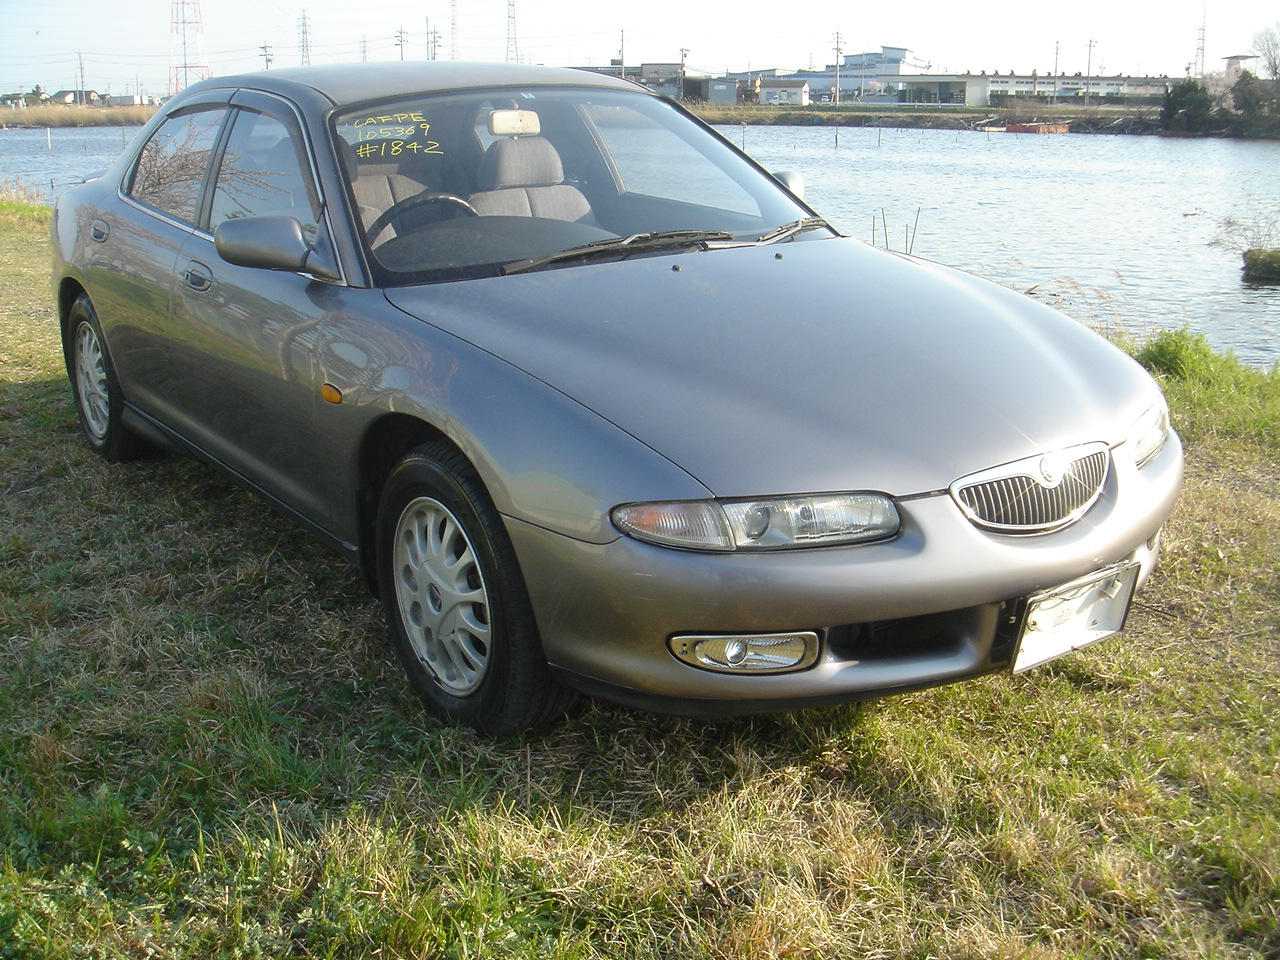 Mazda Eunos-500  1.8 i V6 24V 140 KM - dane techniczne, wymiary, spalanie i opinie